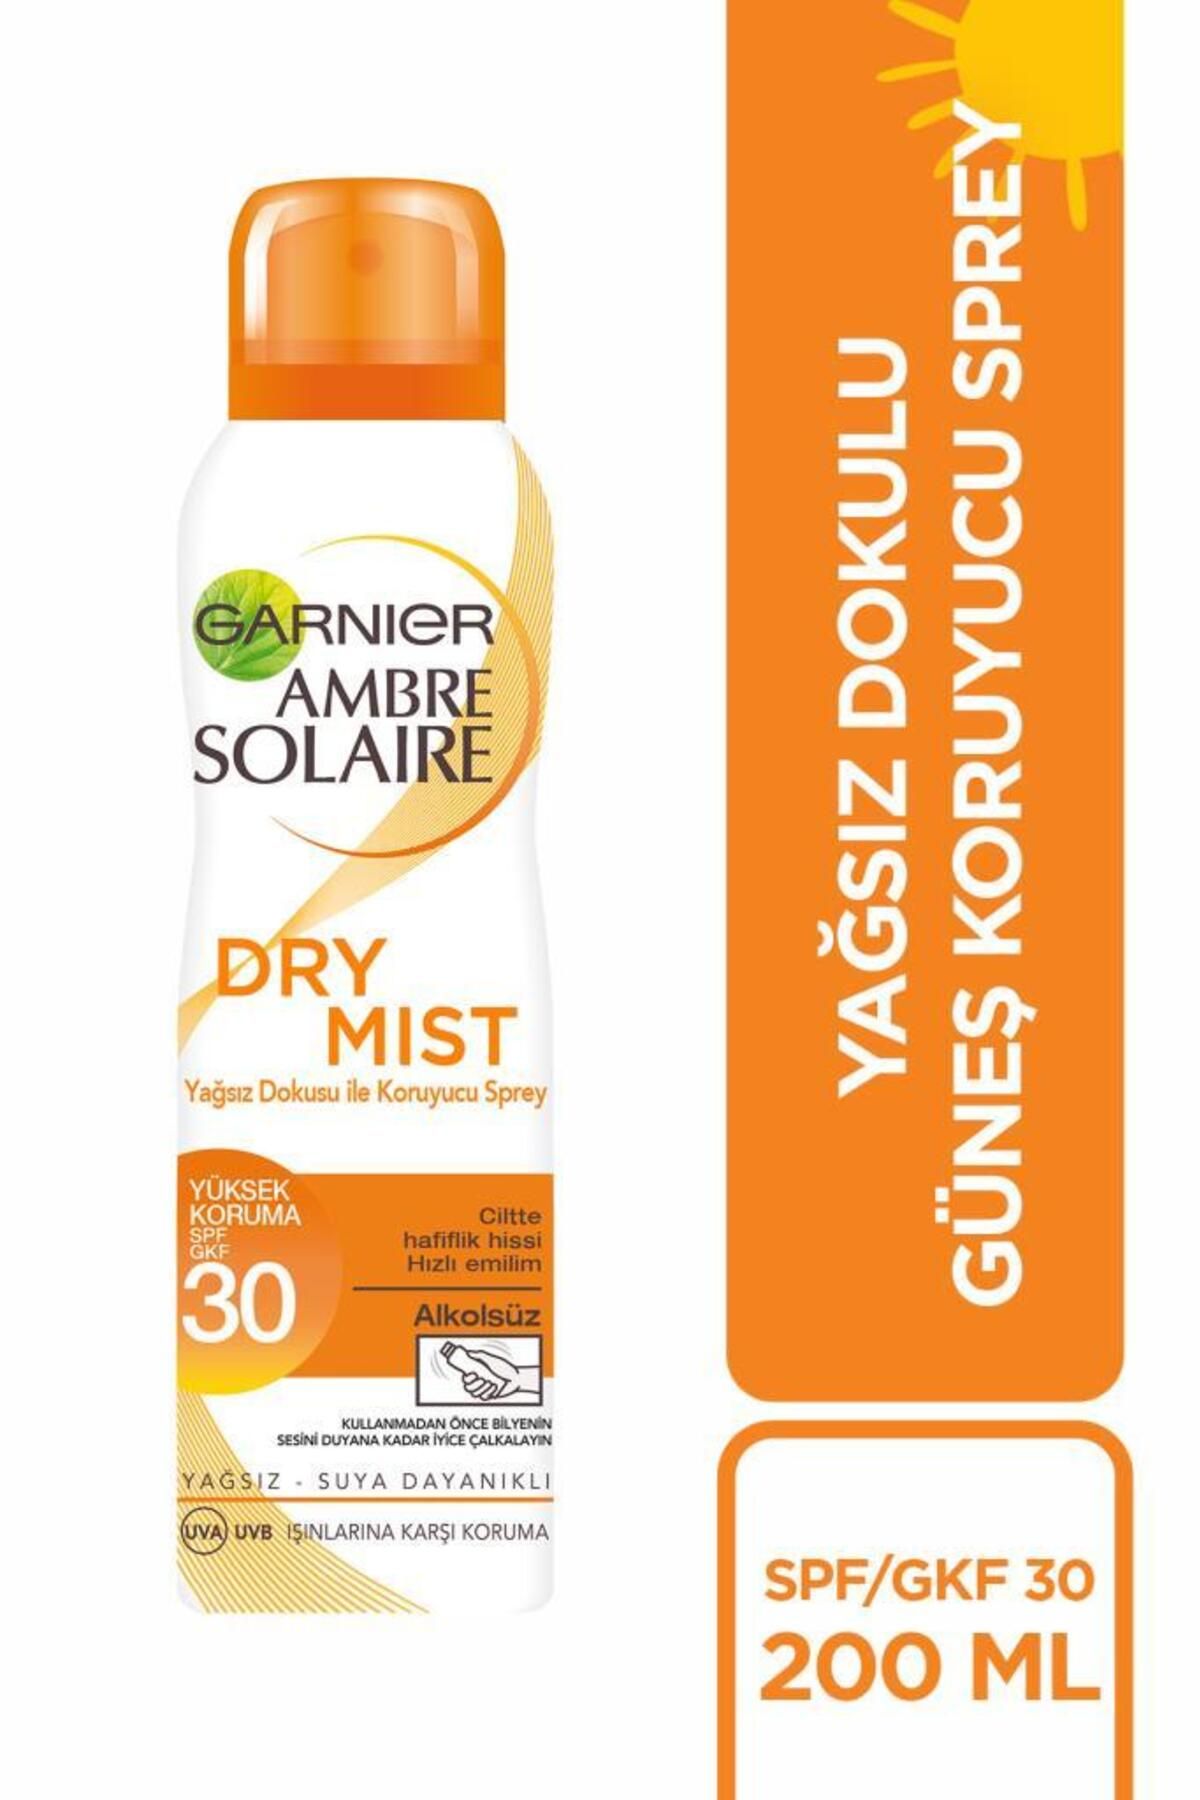 Garnier Ambre Solaire Dry Mist Yağsız Dokulu Güneş Koruyucu Sprey Gkf30 200ml